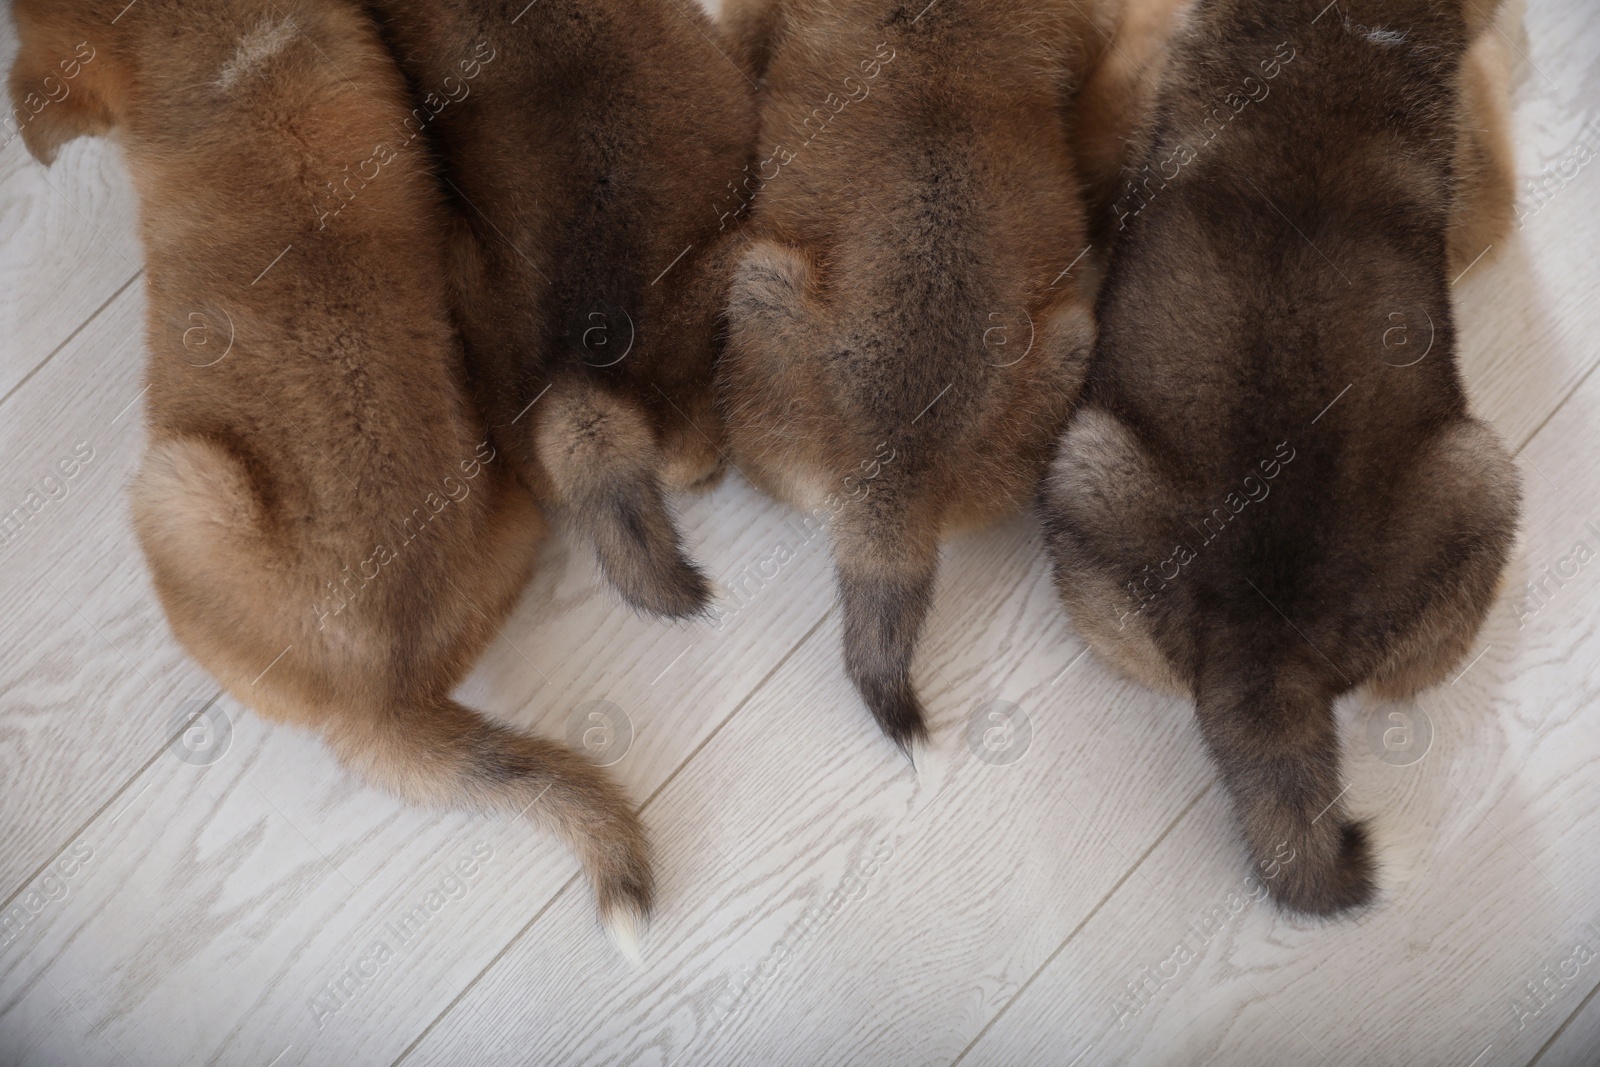 Photo of Adorable Akita Inu puppies indoors, top view